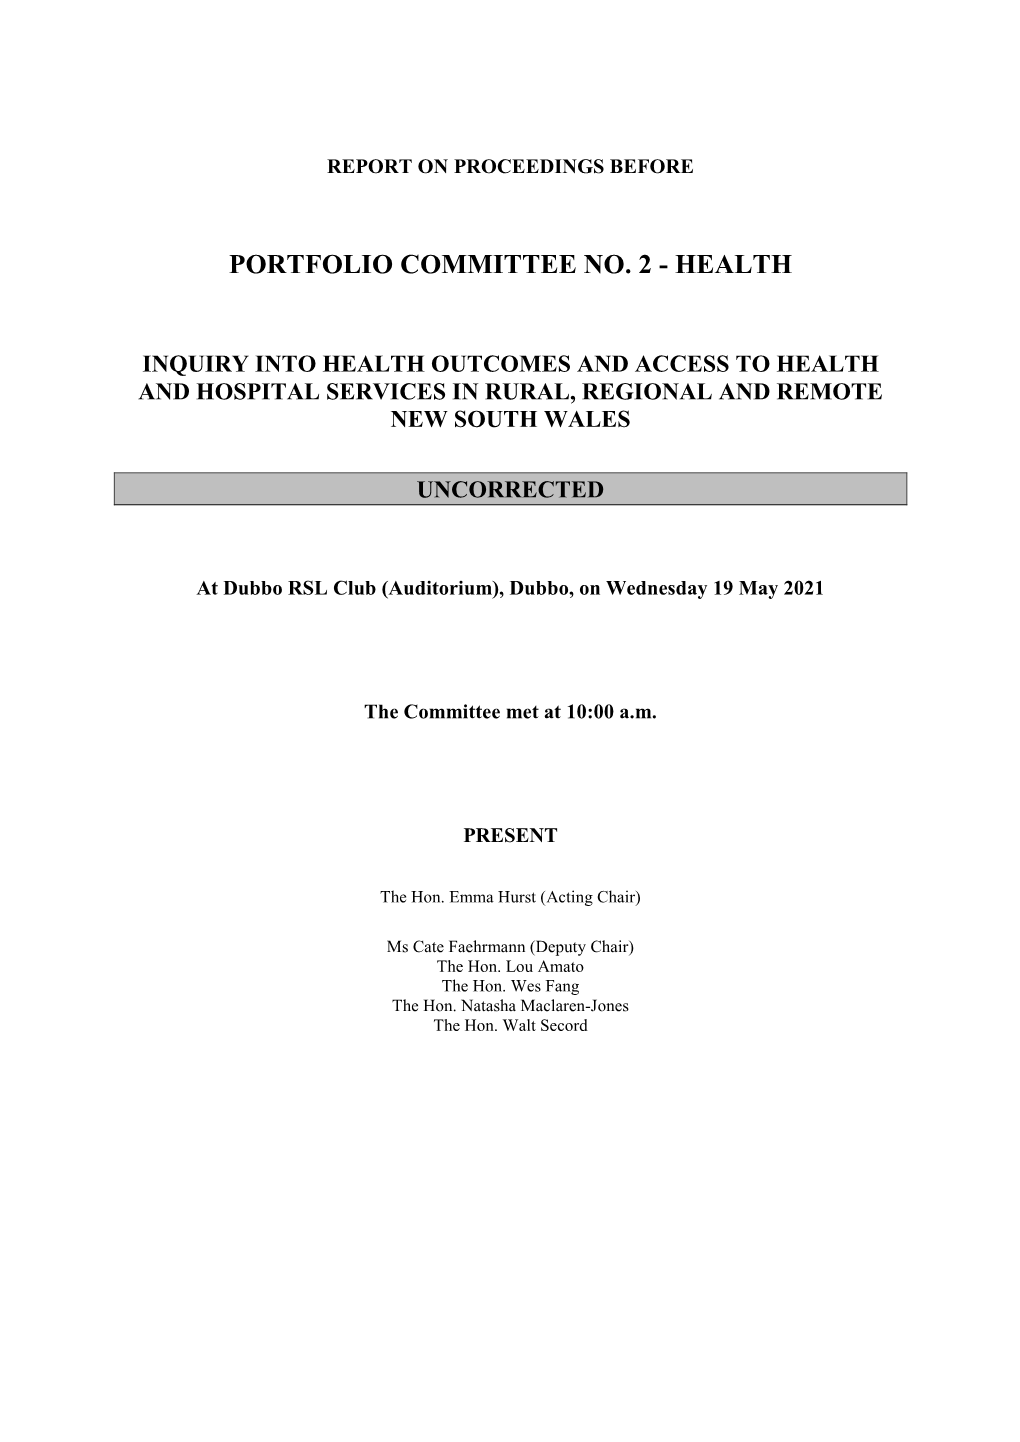 Portfolio Committee No. 2 - Health